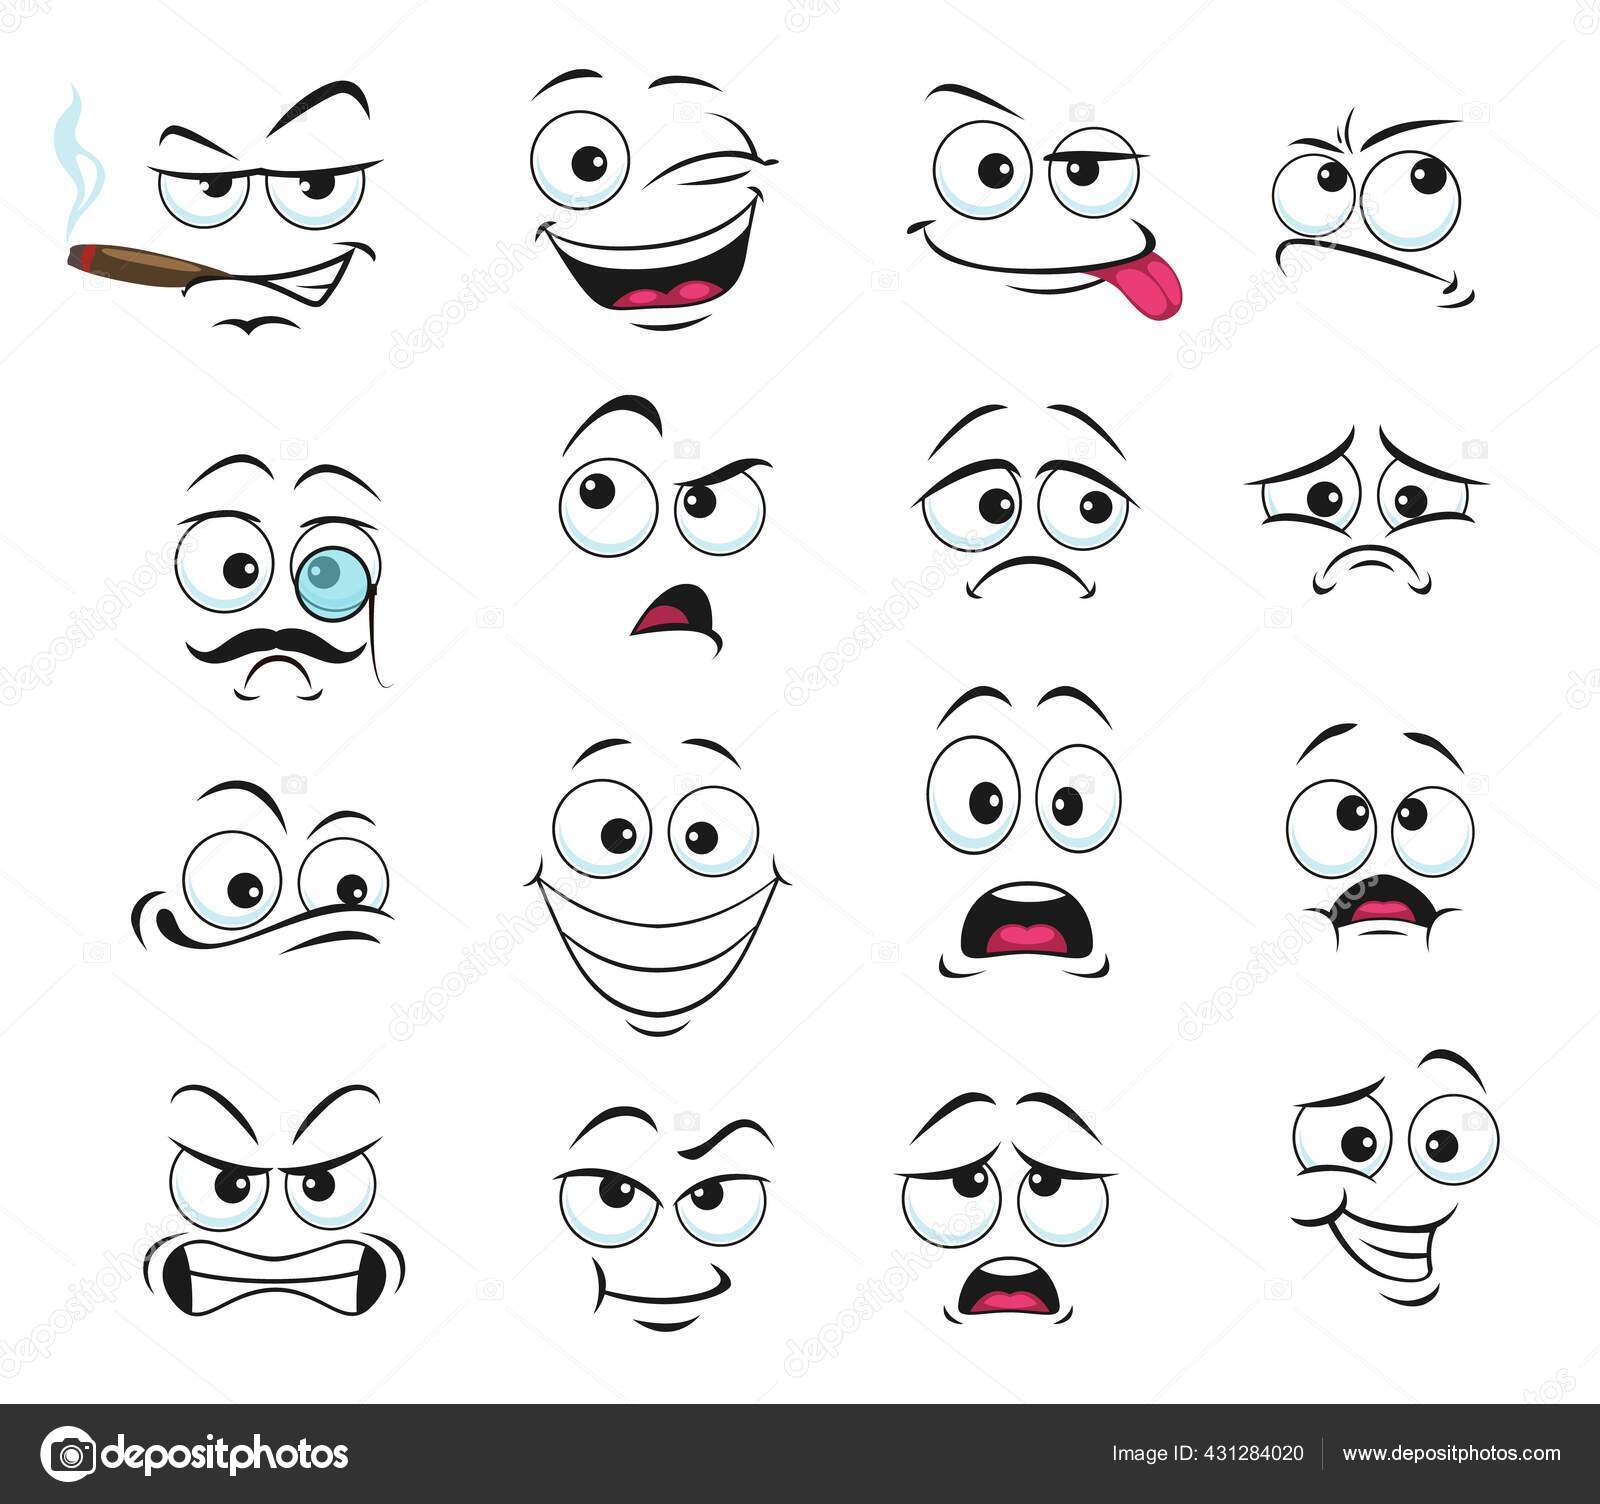 Conjunto de ícones de emoji rostos símbolos de humor emoticon fofos  sorrindo feliz, alegre, triste e com raiva